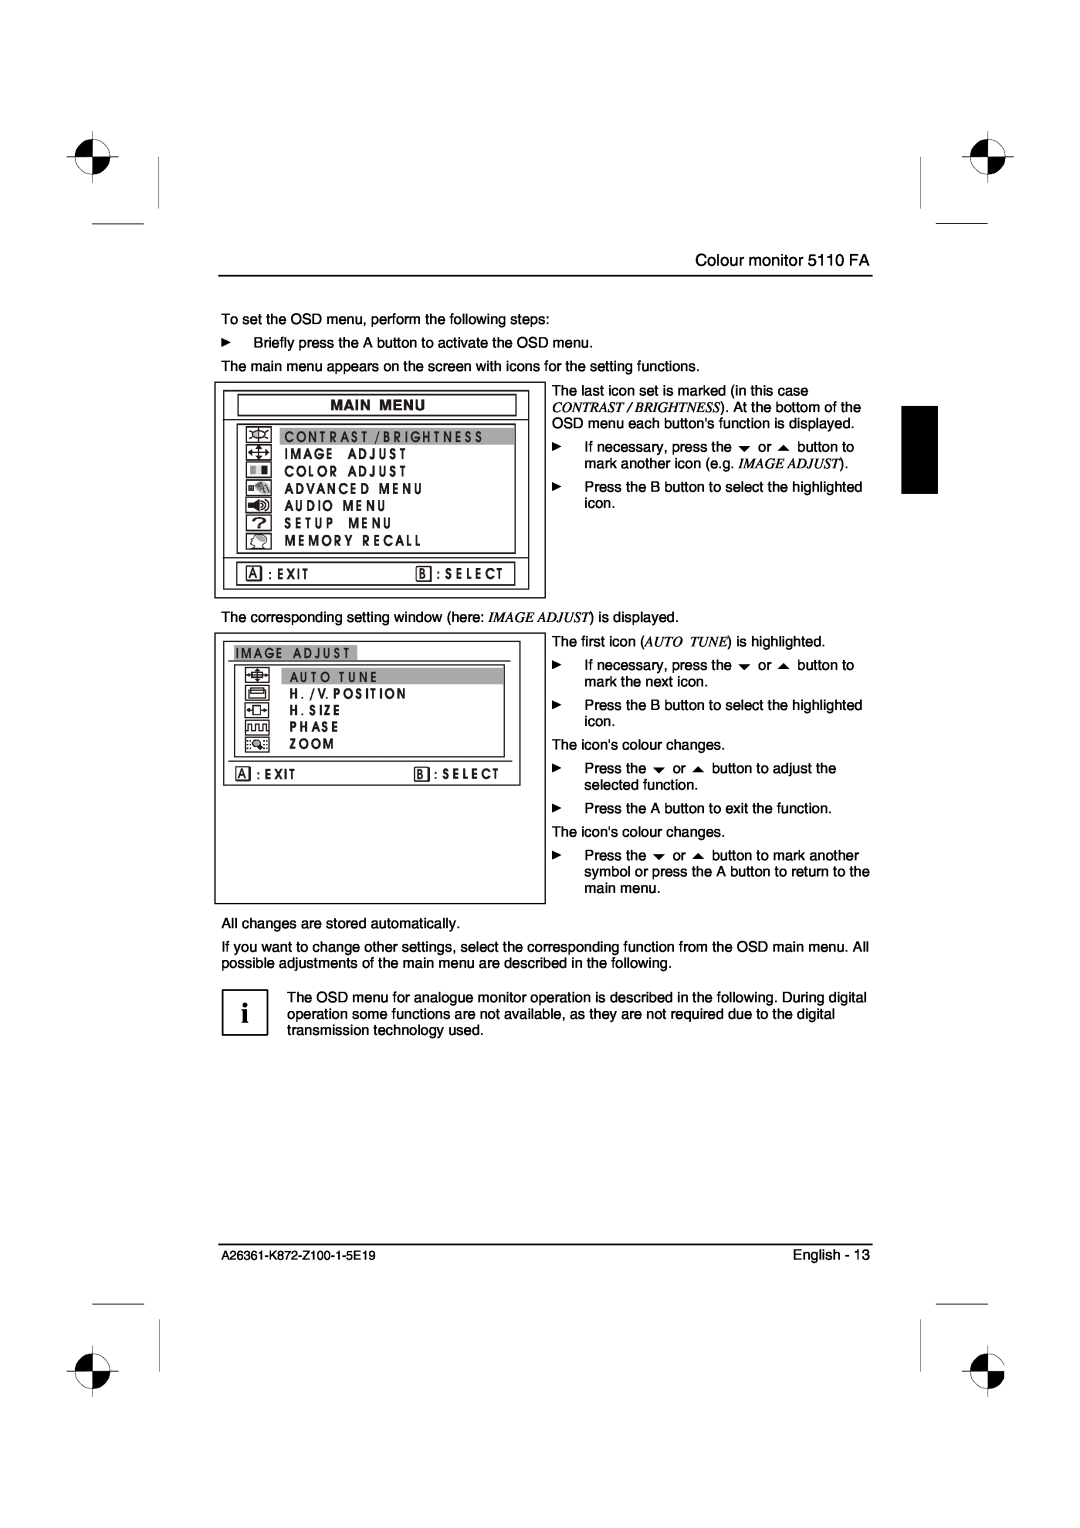 Fujitsu Siemens Computers manual Colour monitor 5110 FA, Im Age, Ad J U S T, Ad Van Ce D M E N U, Au D Io, E Xit 